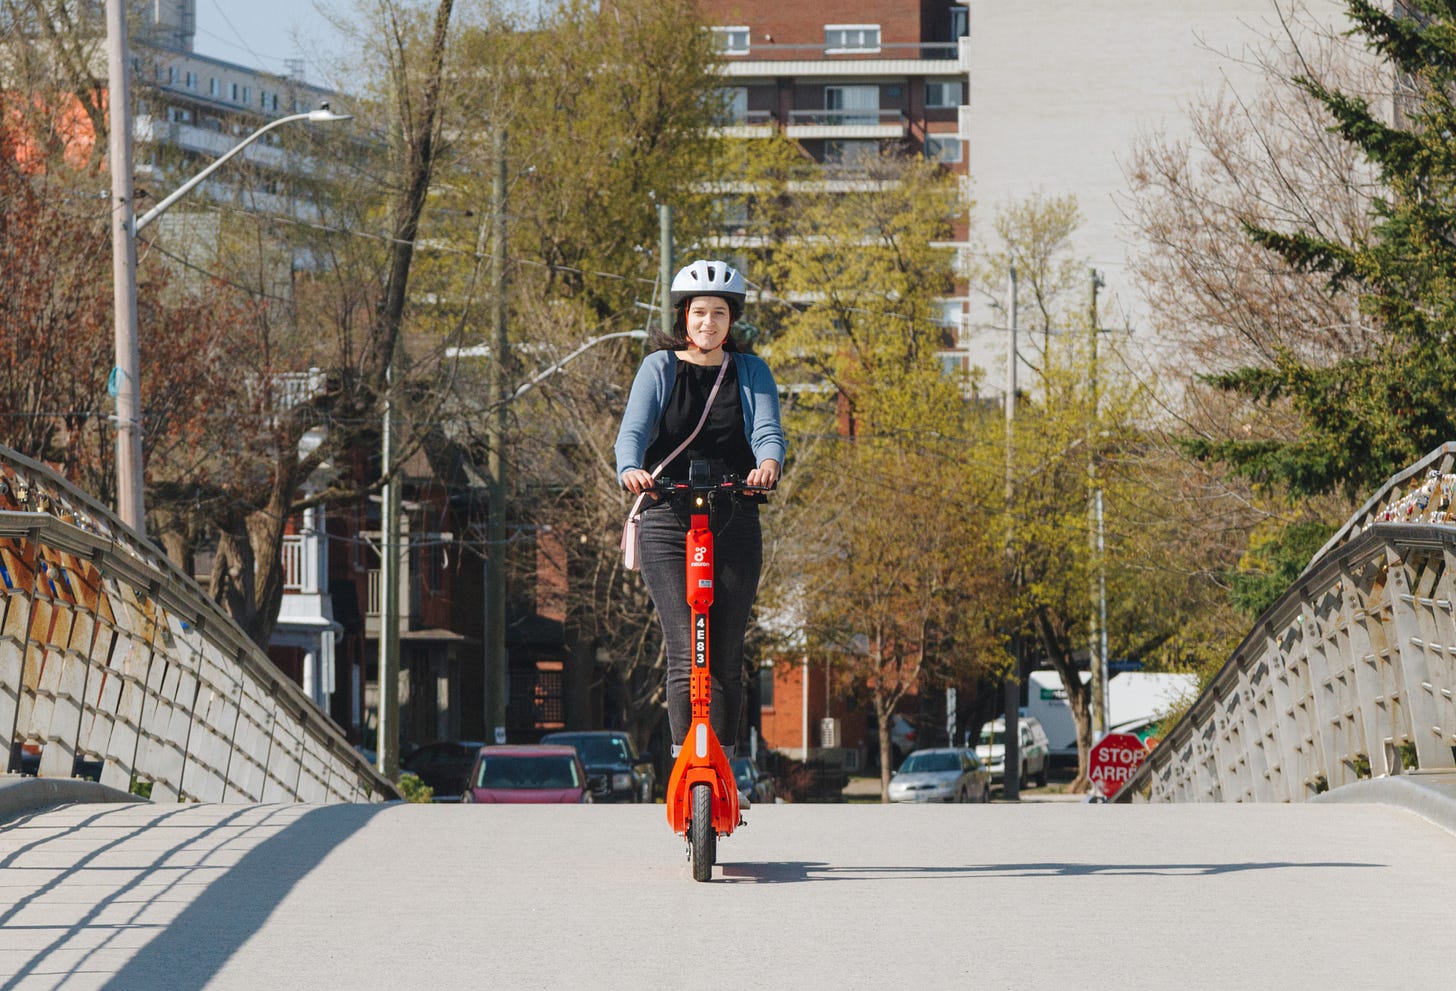 A woman wearing a helmet rides an e-scooter over a footbridge in Ottawa.